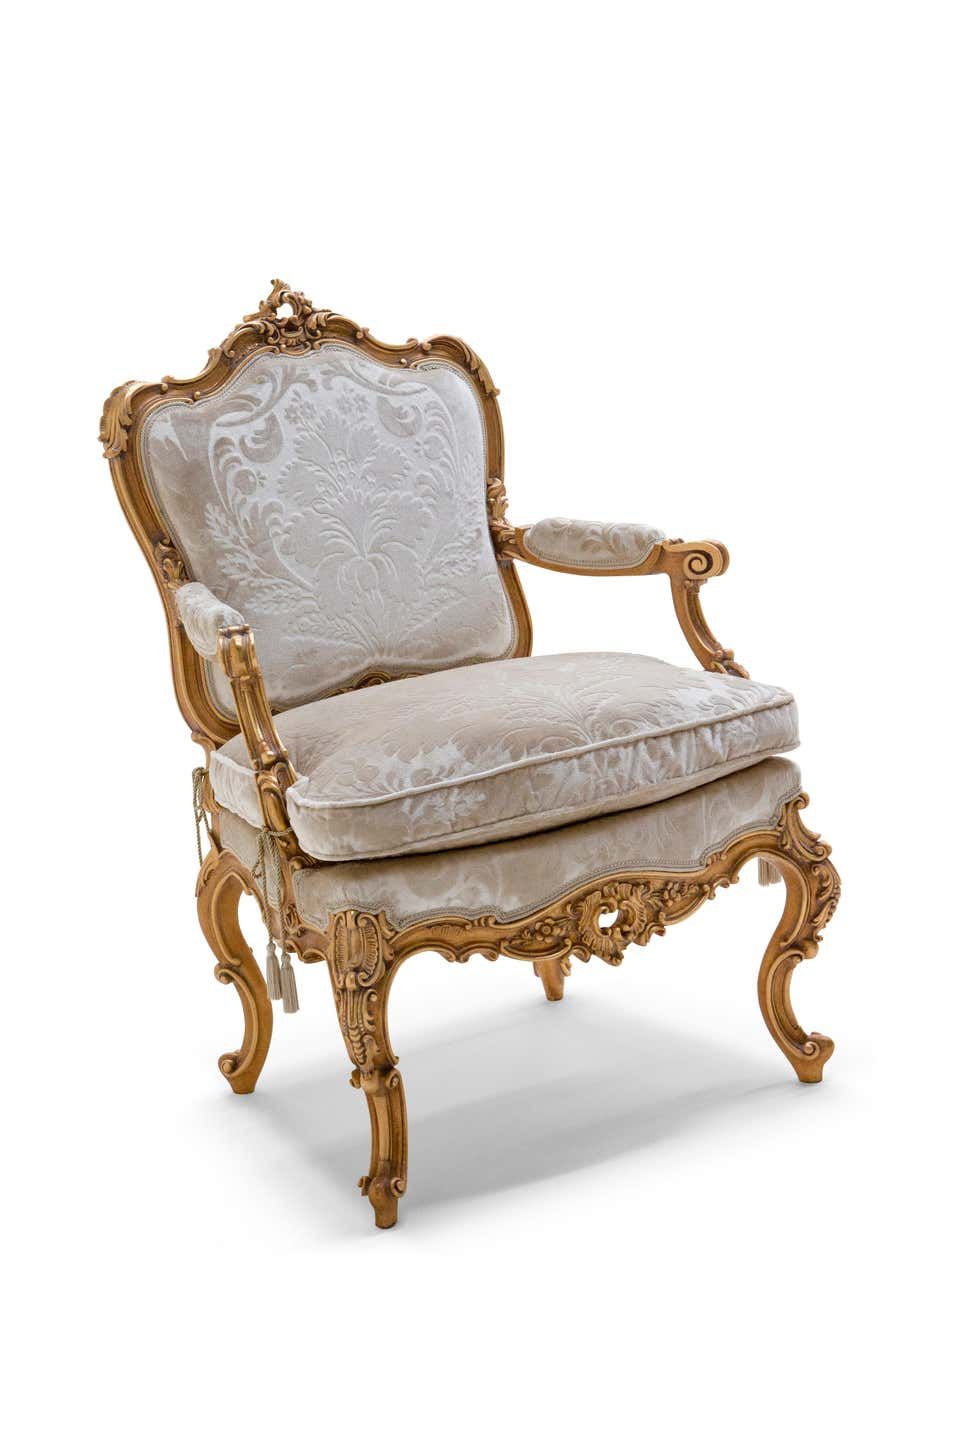 Baroque Furniture Elegant and Ornate Furniture from the Baroque Era